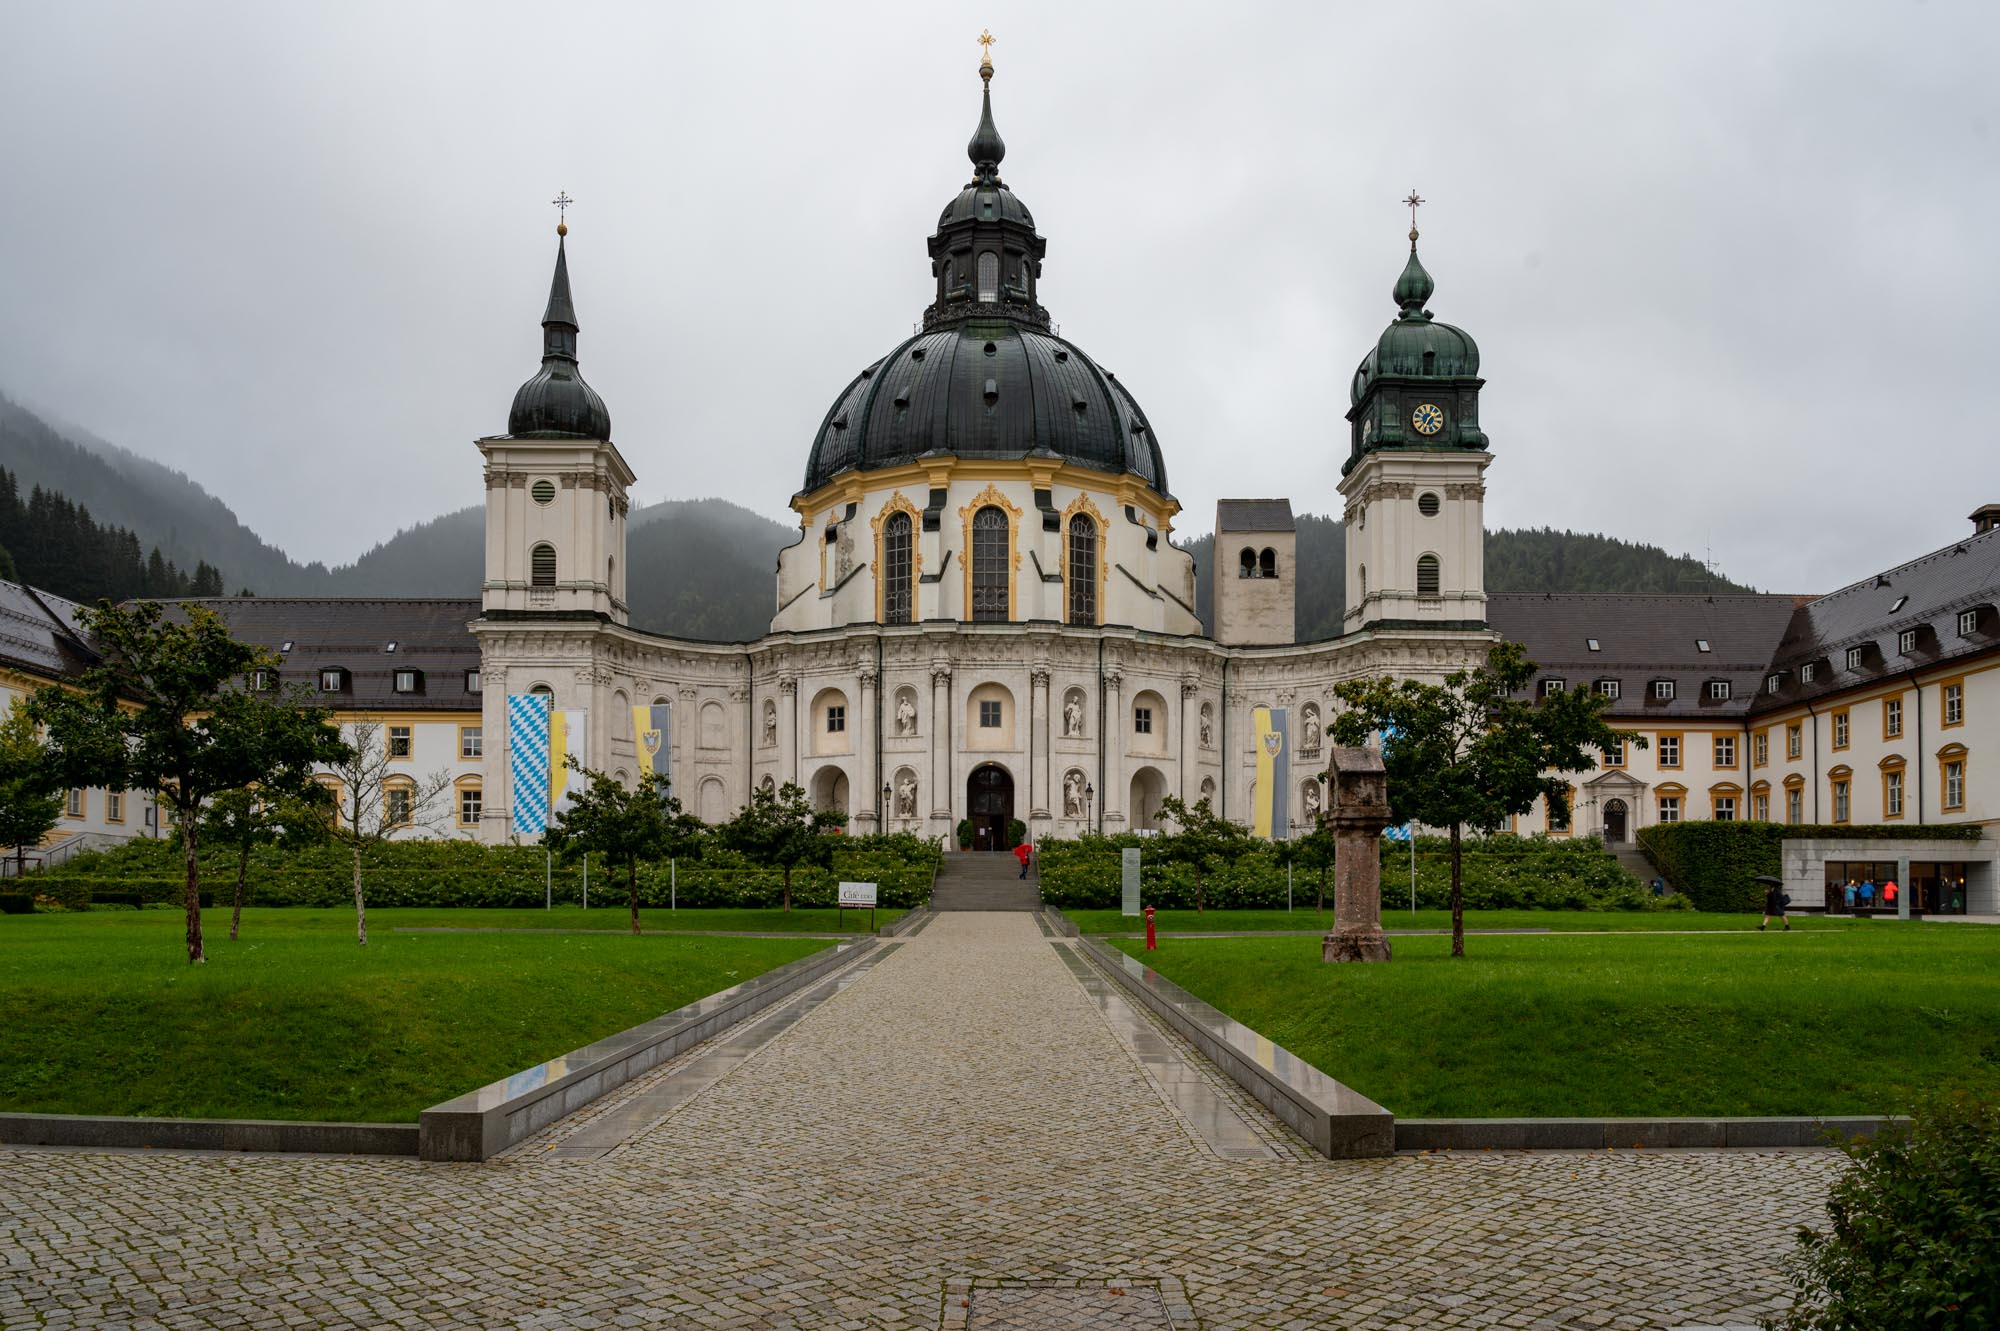 The church at the Ettal Monastery